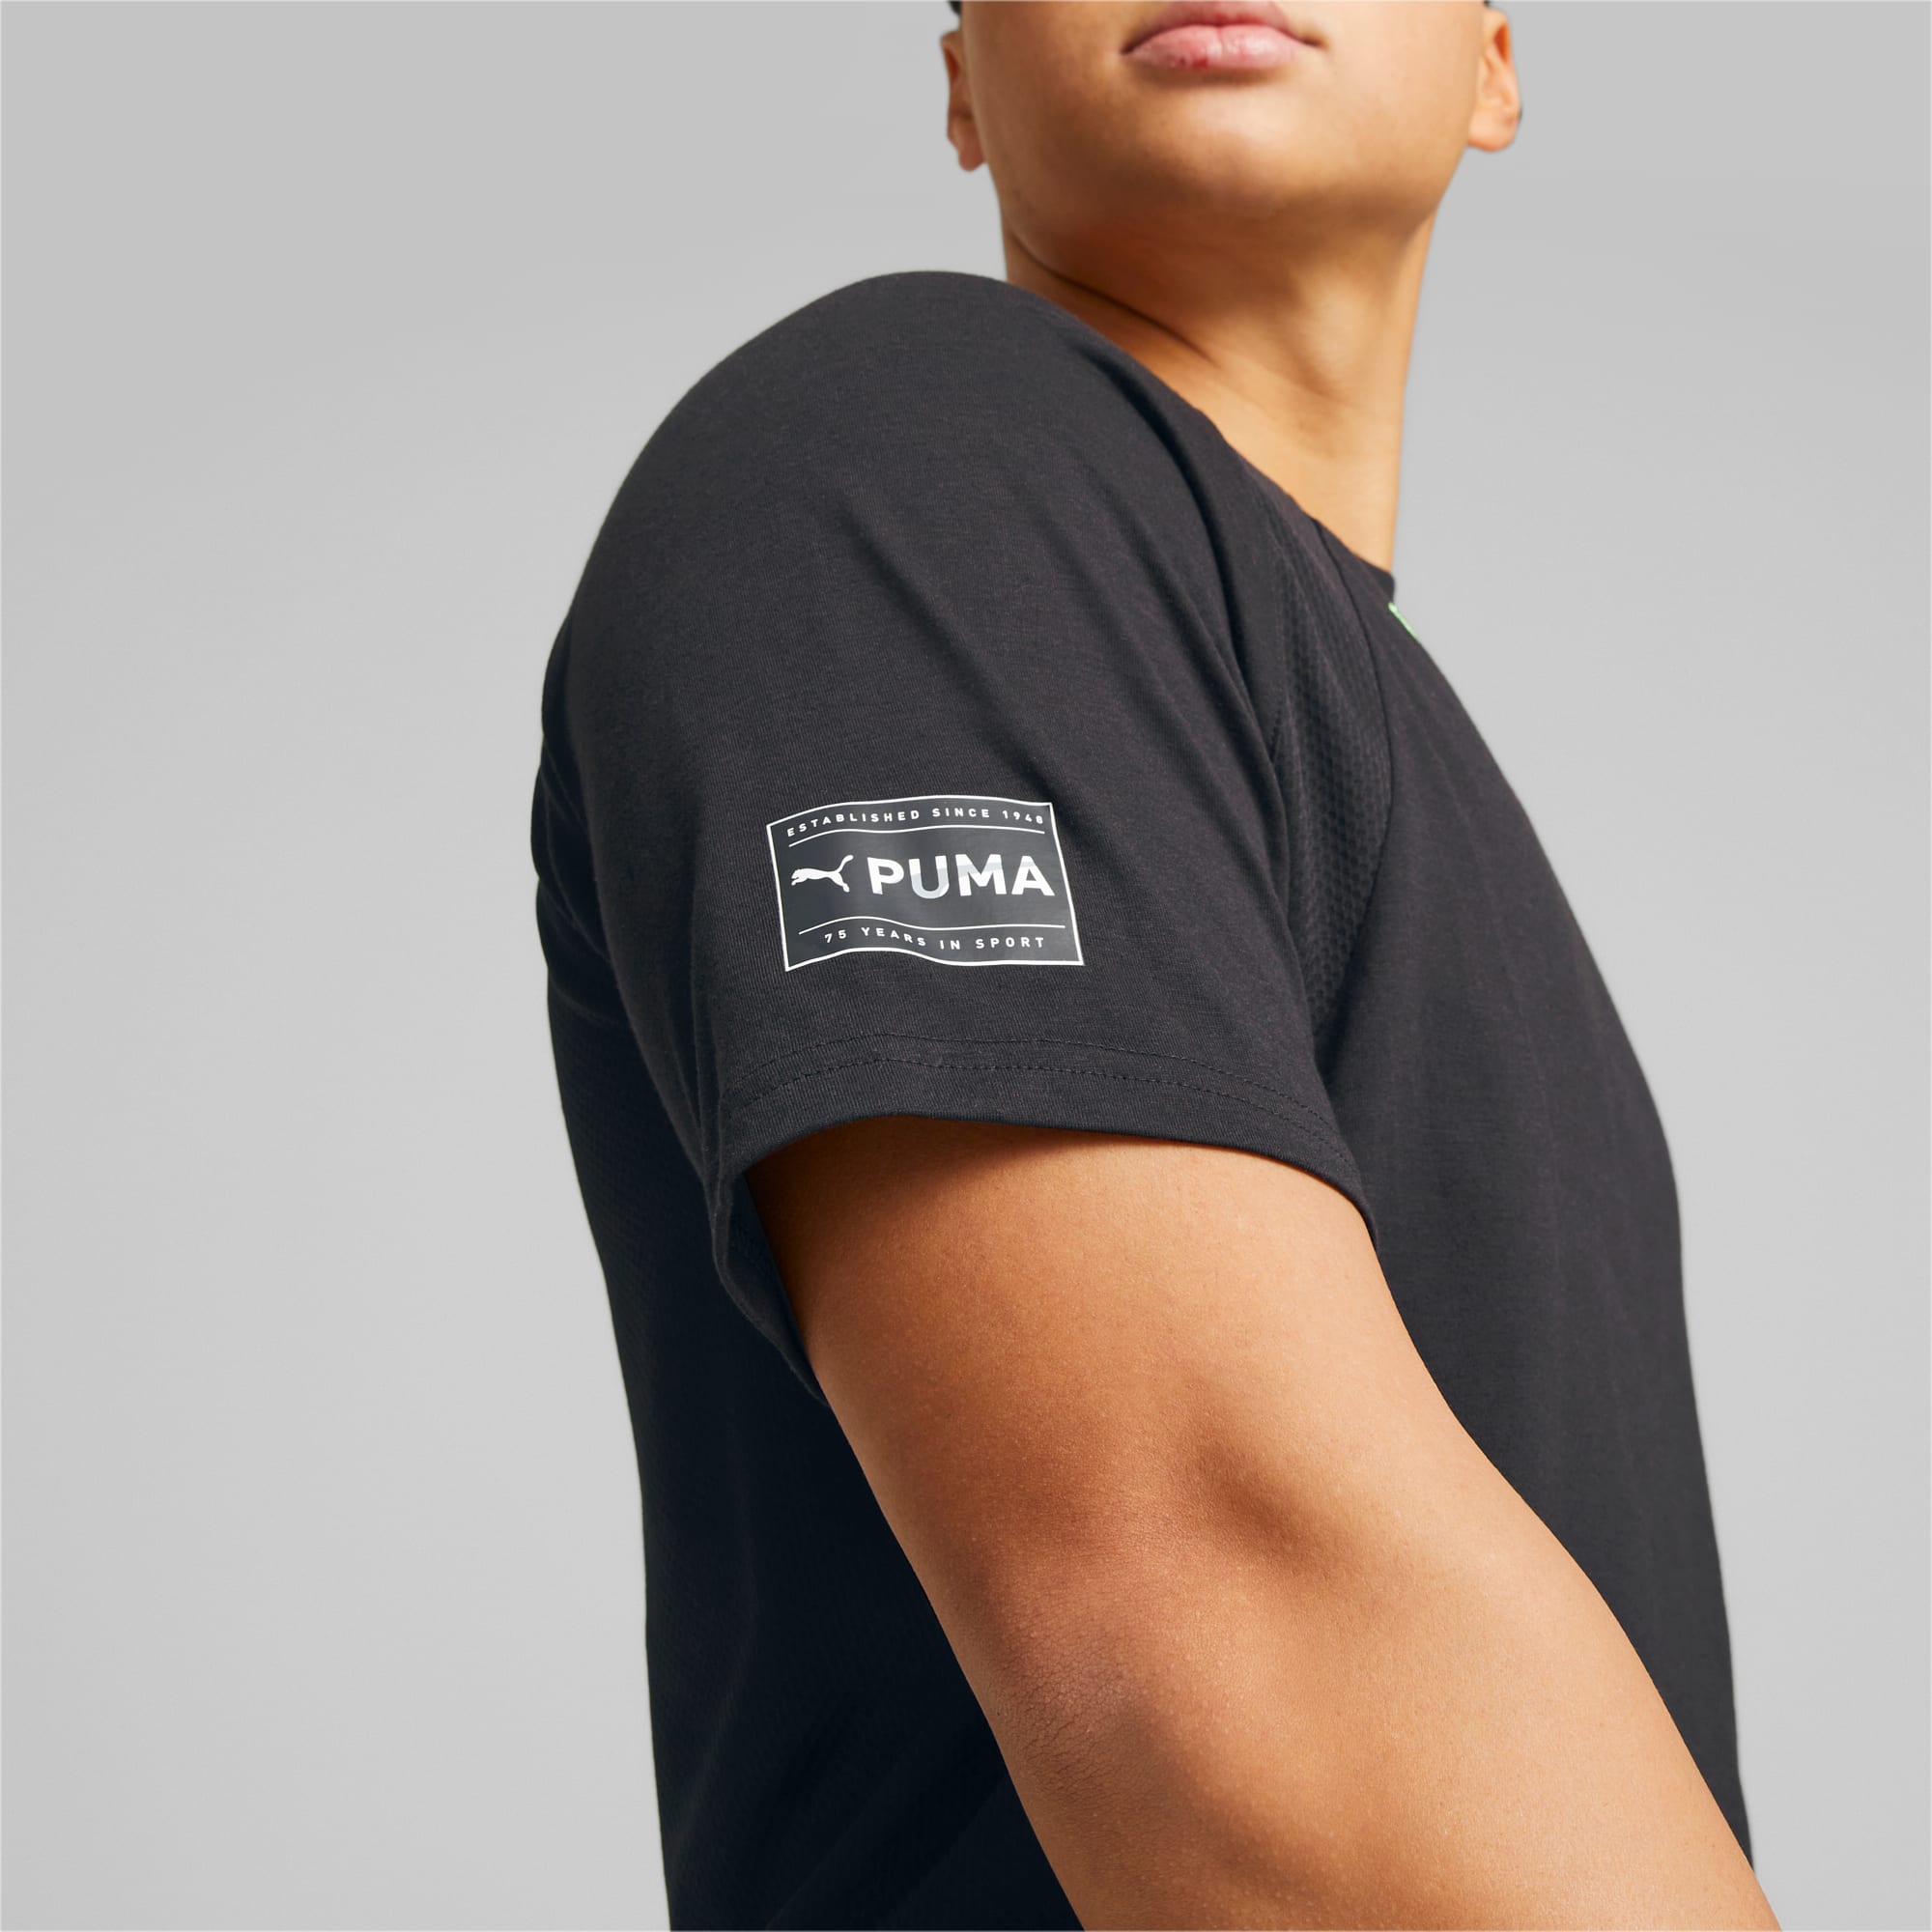 PUMA Fit Ultrabreathe Triblend Training Tee Men | PUMA Black-Fizzy Lime |  PUMA Shop All Puma | PUMA